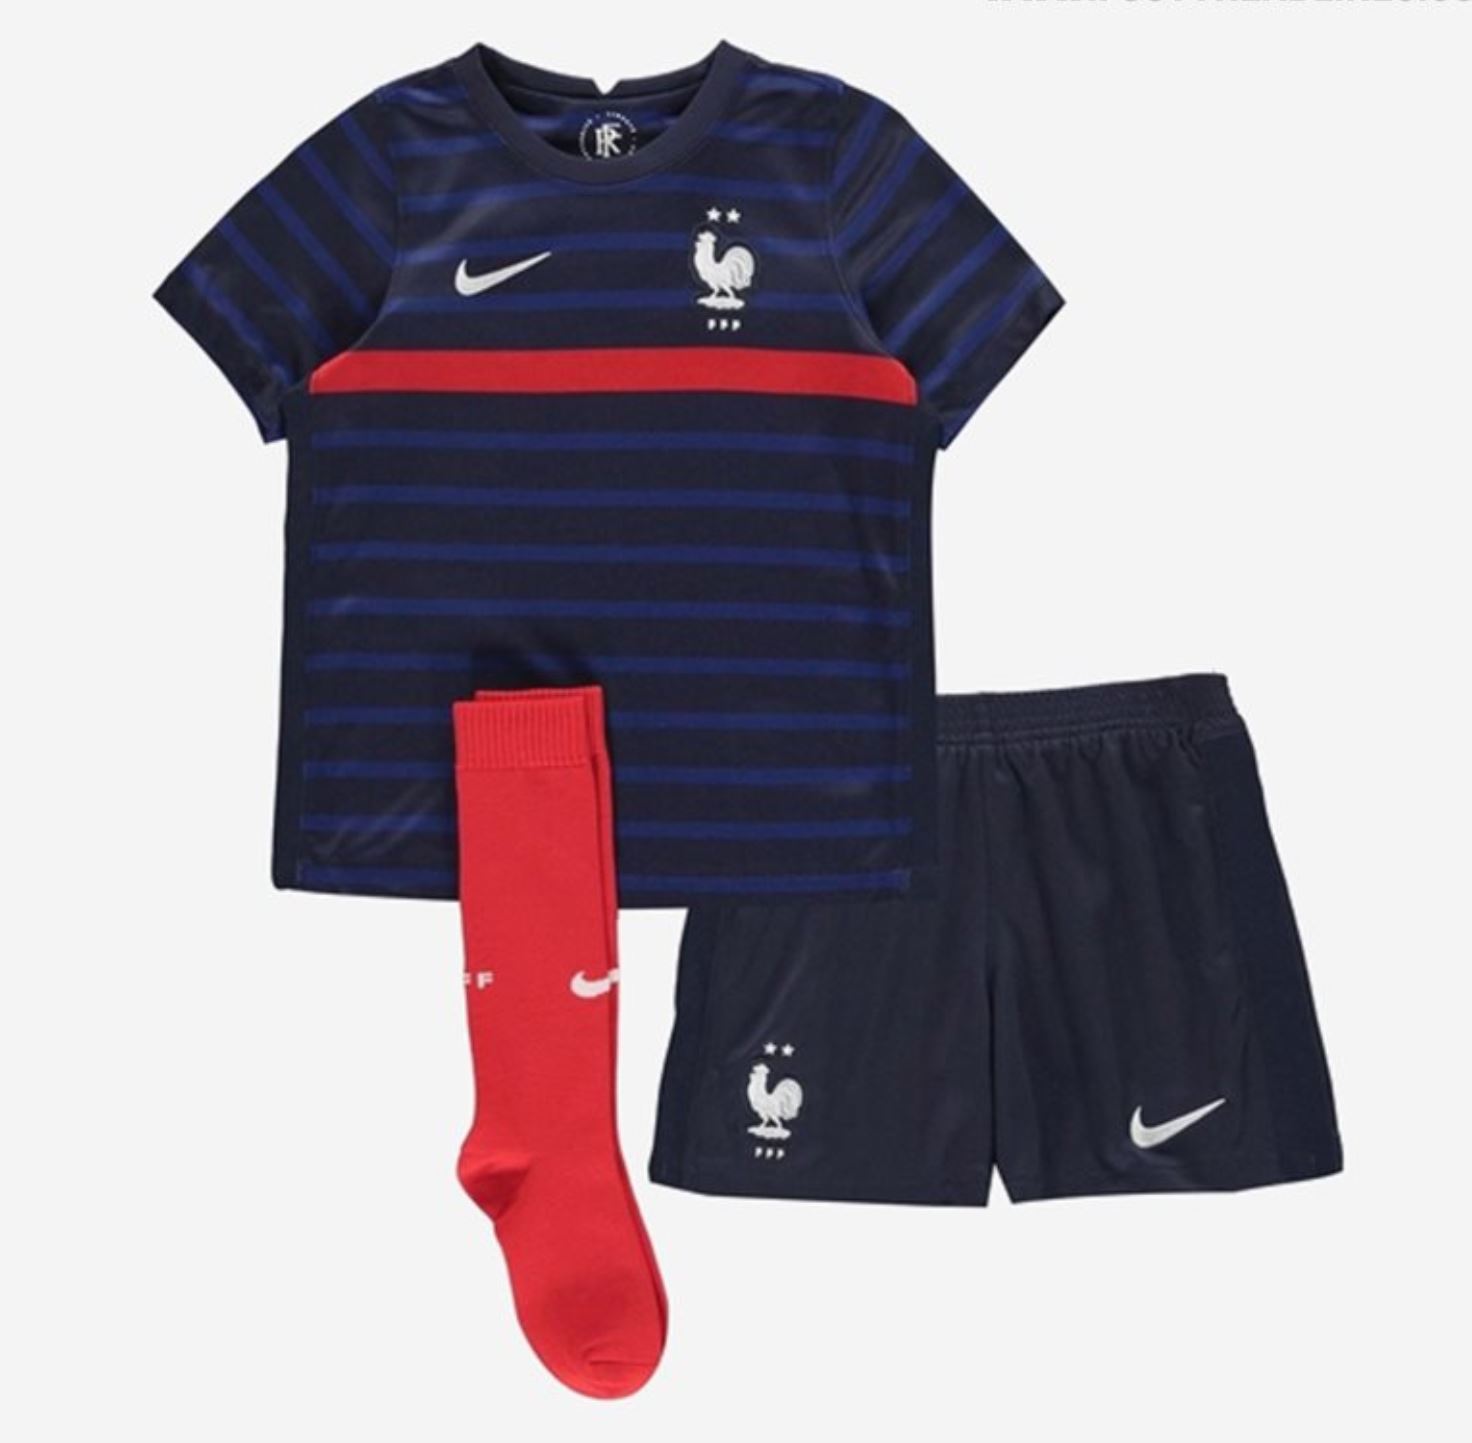 Exclusief toonhoogte in het midden van niets Le maillot domicile de la France Nike 2020-21 a fuité - Maillots football